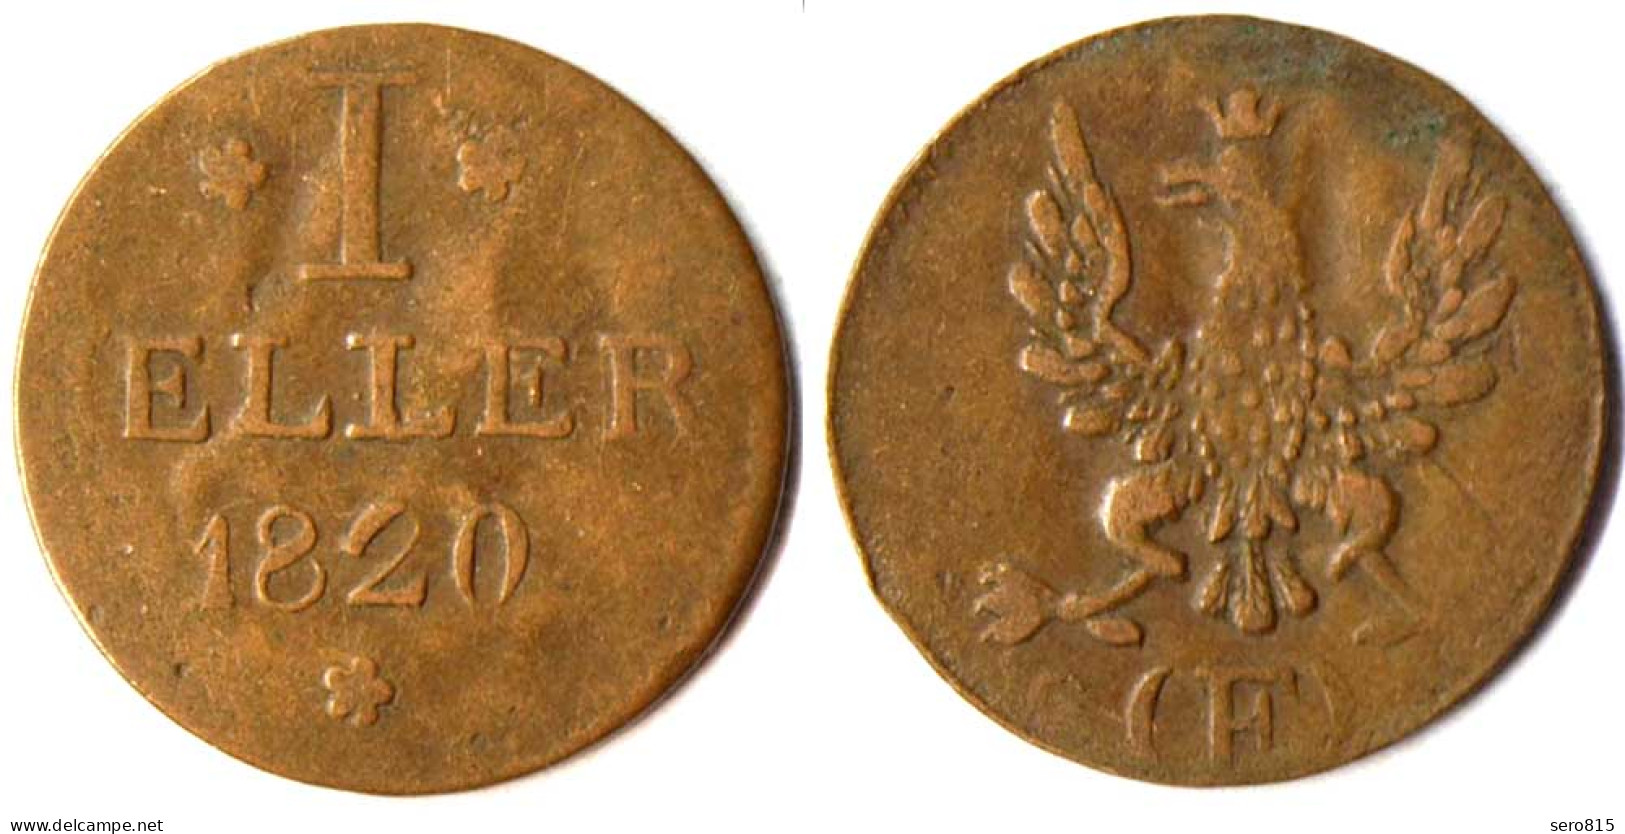 Frankfurt Altdeutsche Staaten 1 Heller 1820 '- F   (r1200 - Small Coins & Other Subdivisions